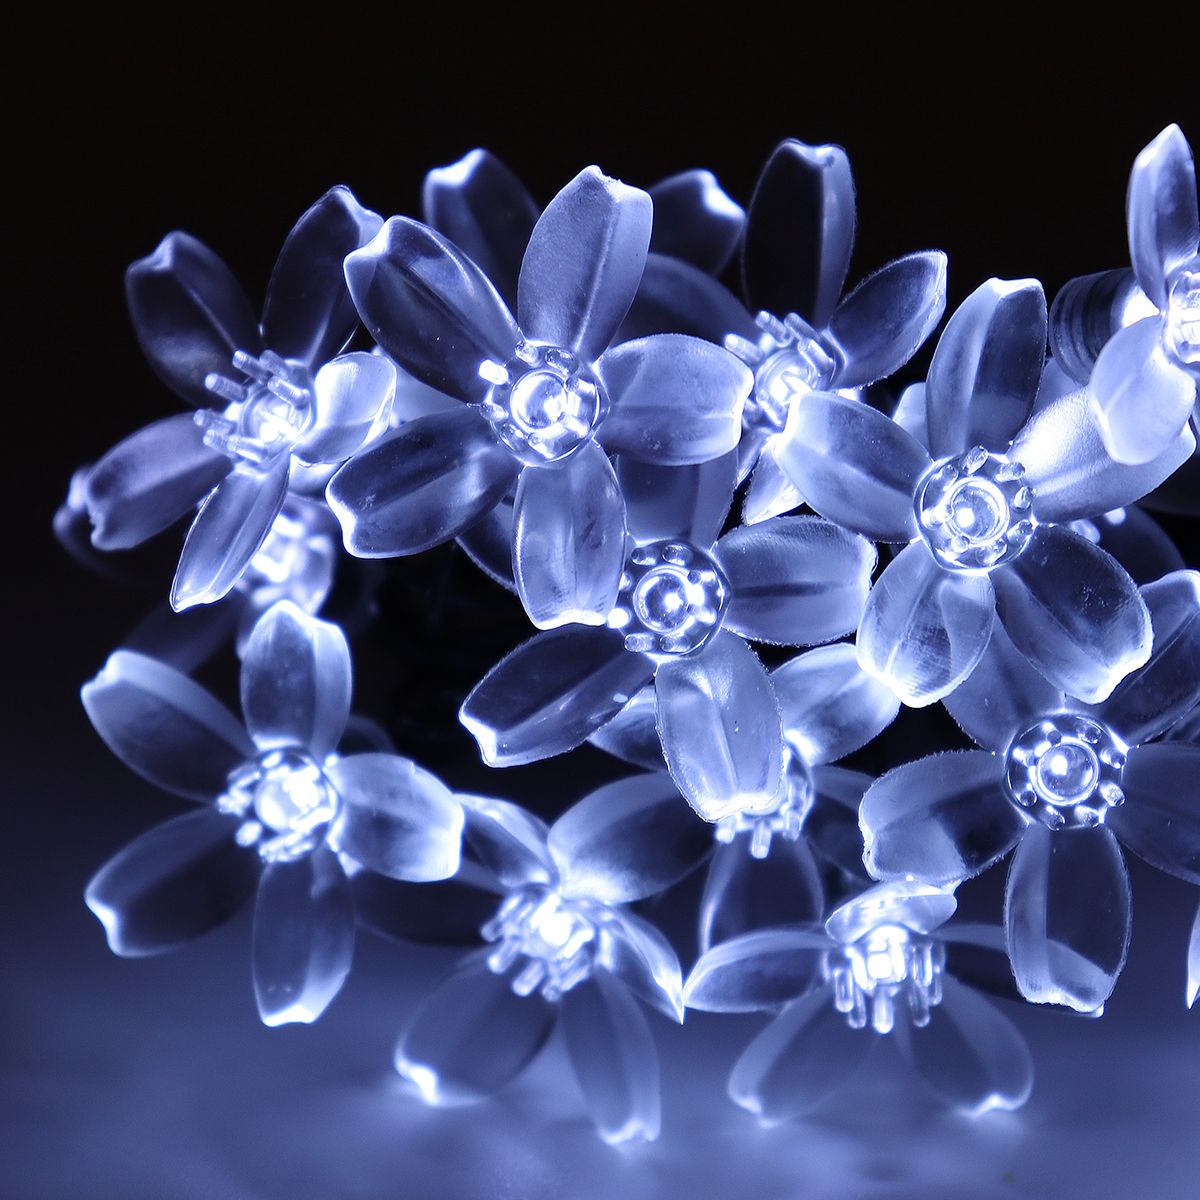 30-LED-Solar-Powered-Fairy-String-Flower-Lights-InOutdoor-Garden-Birthday-Party-Christmas-Tree-Chris-1737981